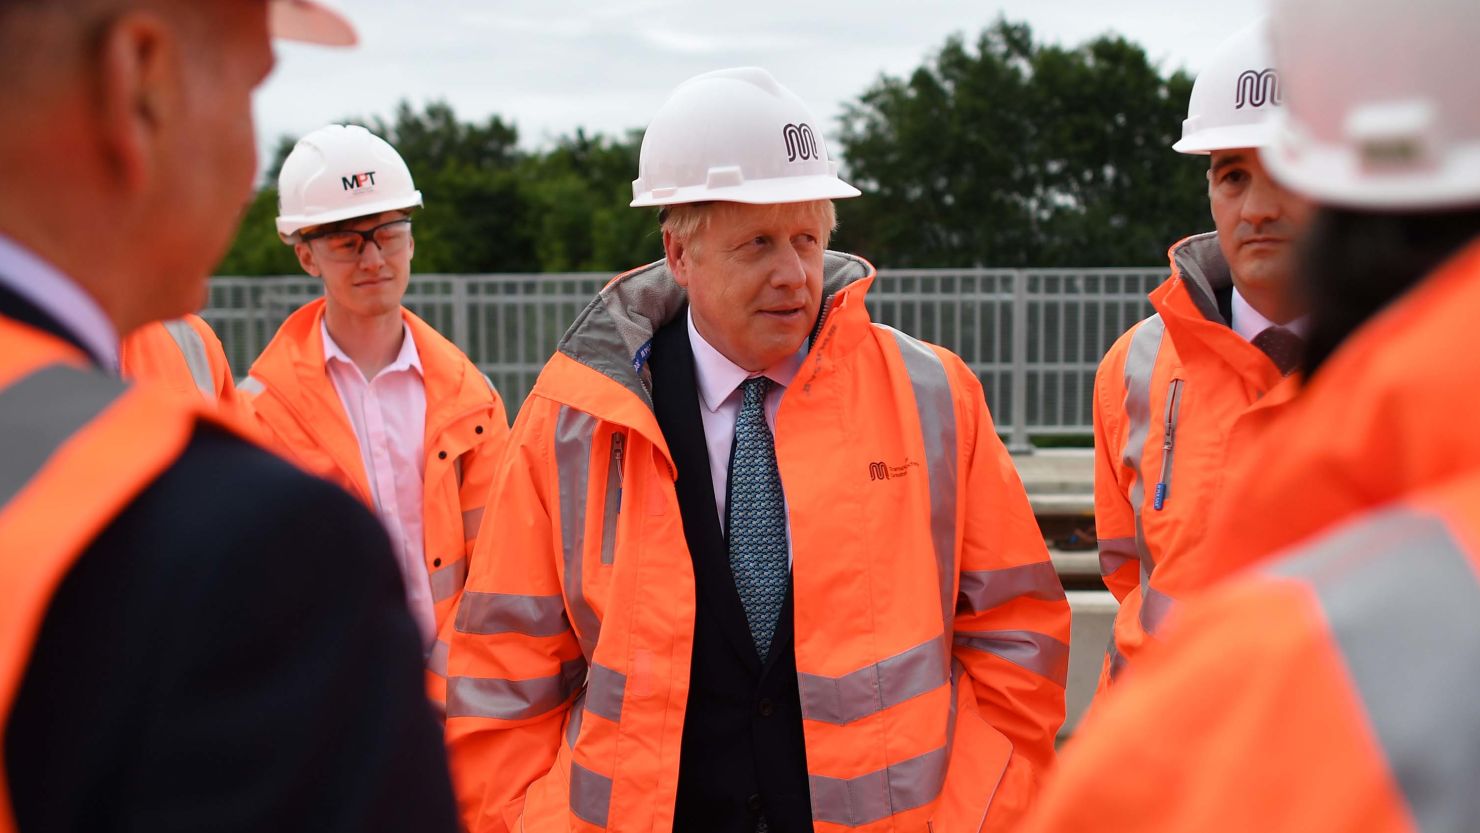 Britain's Prime Minister Boris Johnson meets engineering graduates in Manchester, England.